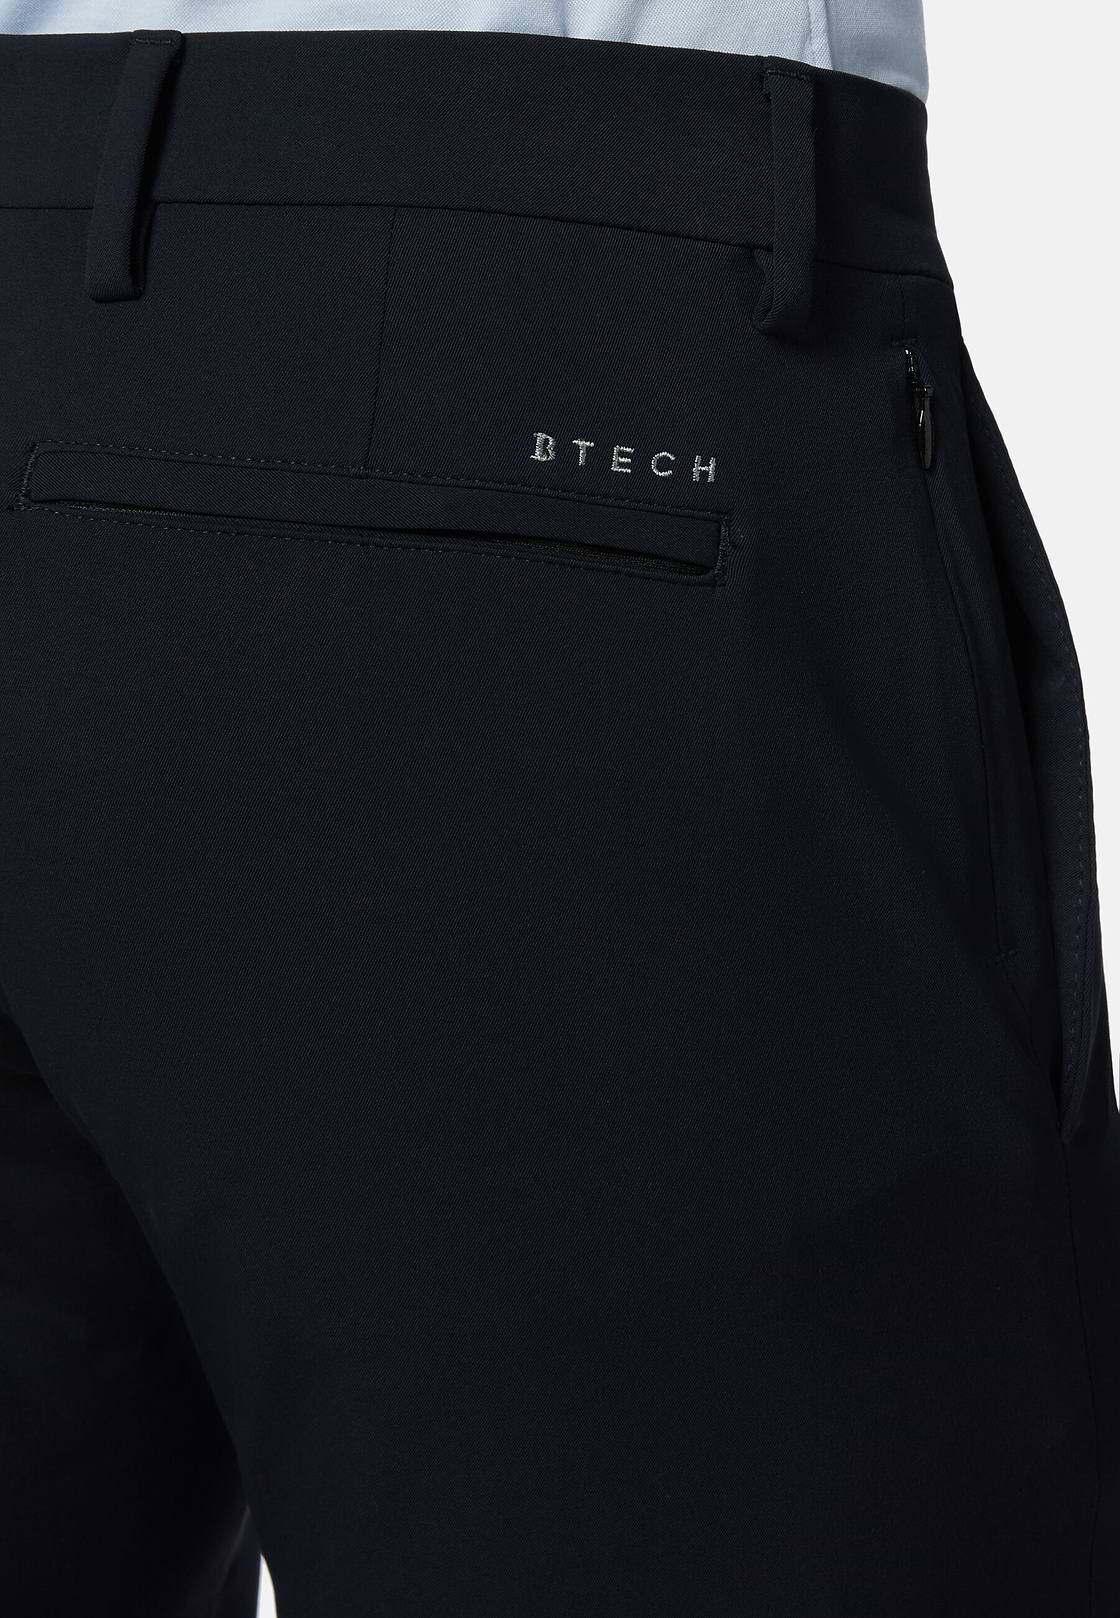 Hose aus B Tech Performance Stretch Nylon, Navy blau, hi-res